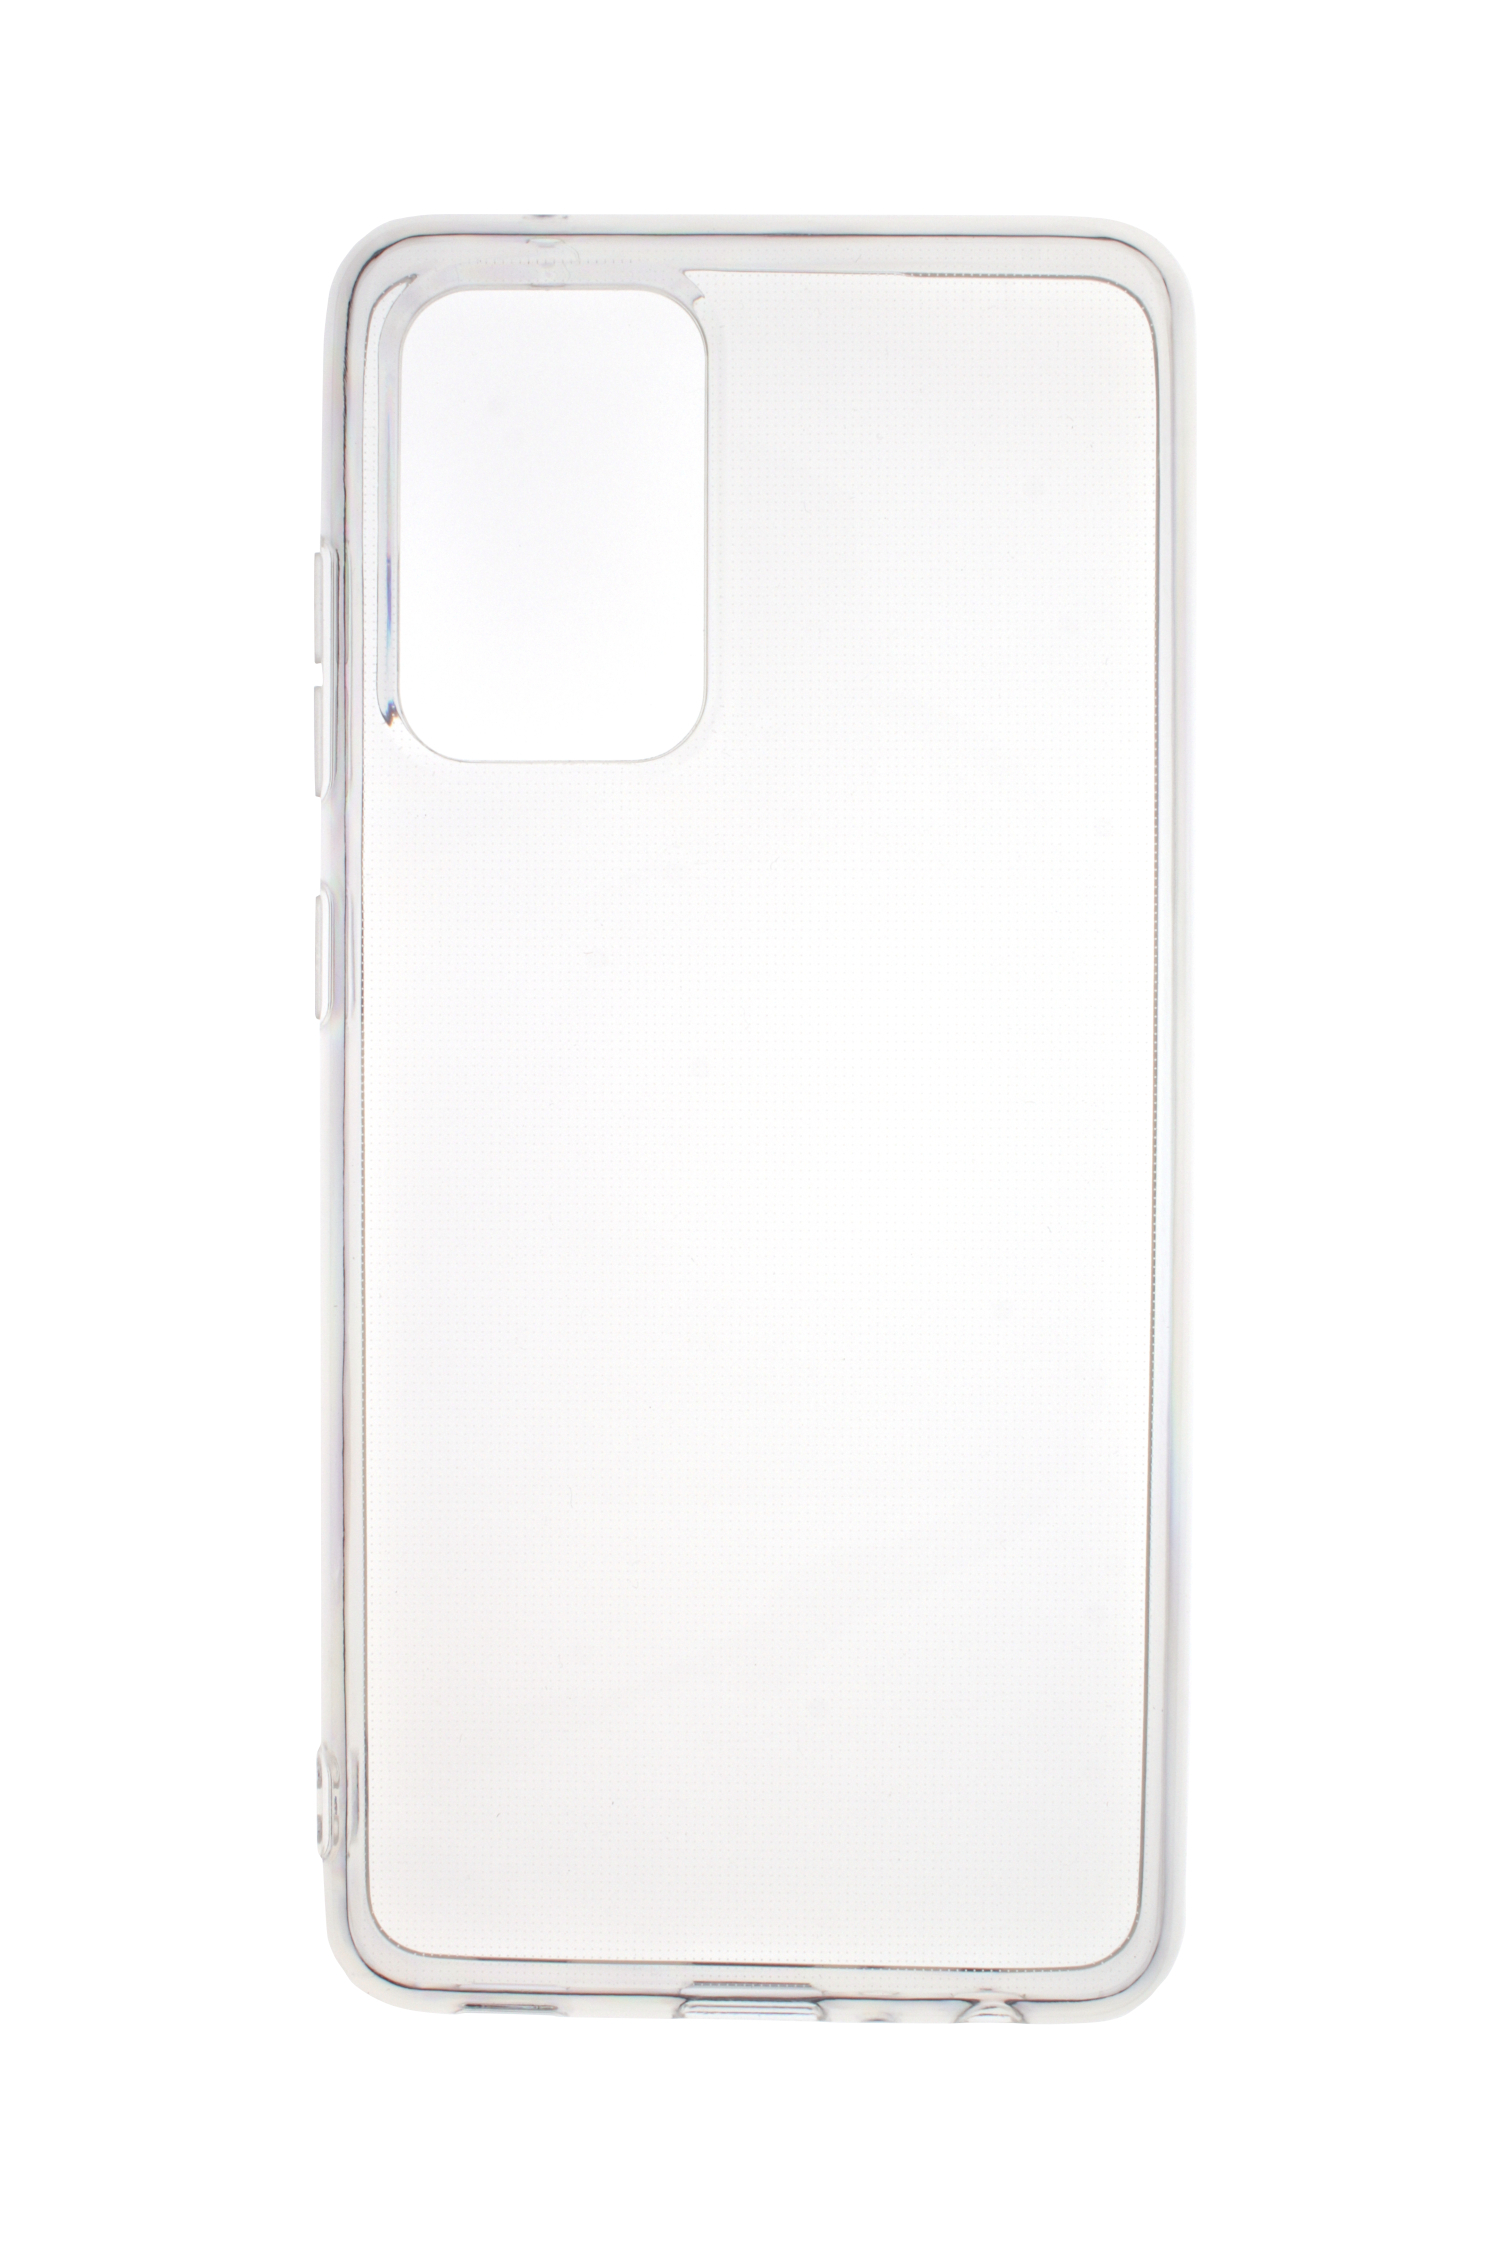 TPU Galaxy JAMCOVER Galaxy Backcover, Transparent Case, A52 5G, 5G, Galaxy A52s A52, mm 1.8 Samsung,